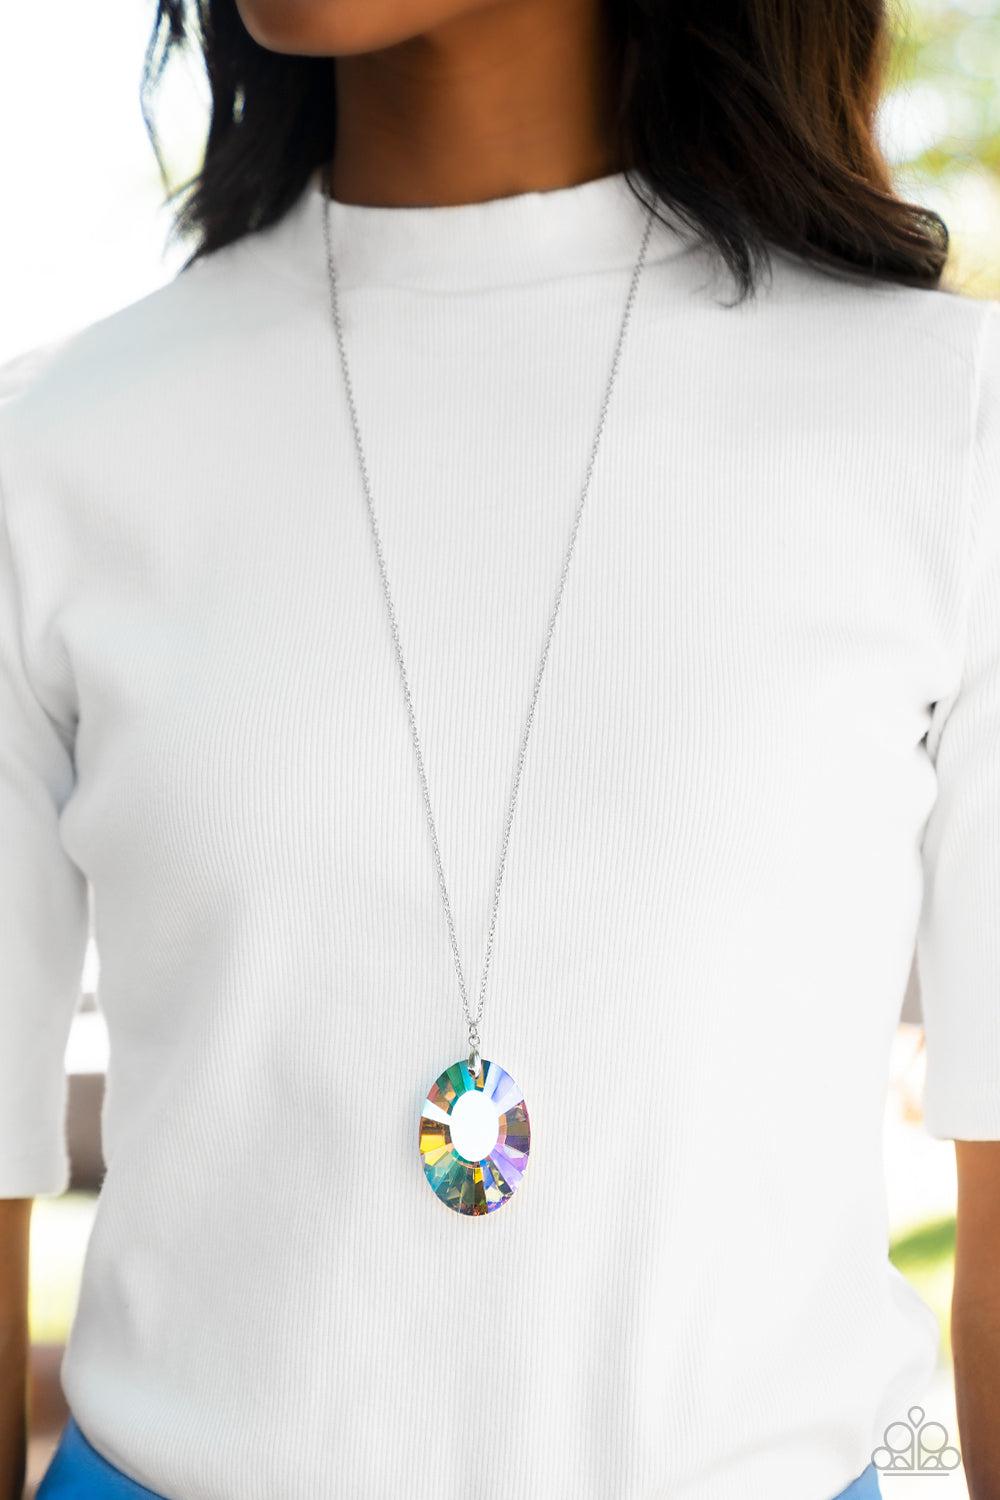 Celestial Essence Multi Iridescent Gem Necklace - Paparazzi Accessories- lightbox - CarasShop.com - $5 Jewelry by Cara Jewels